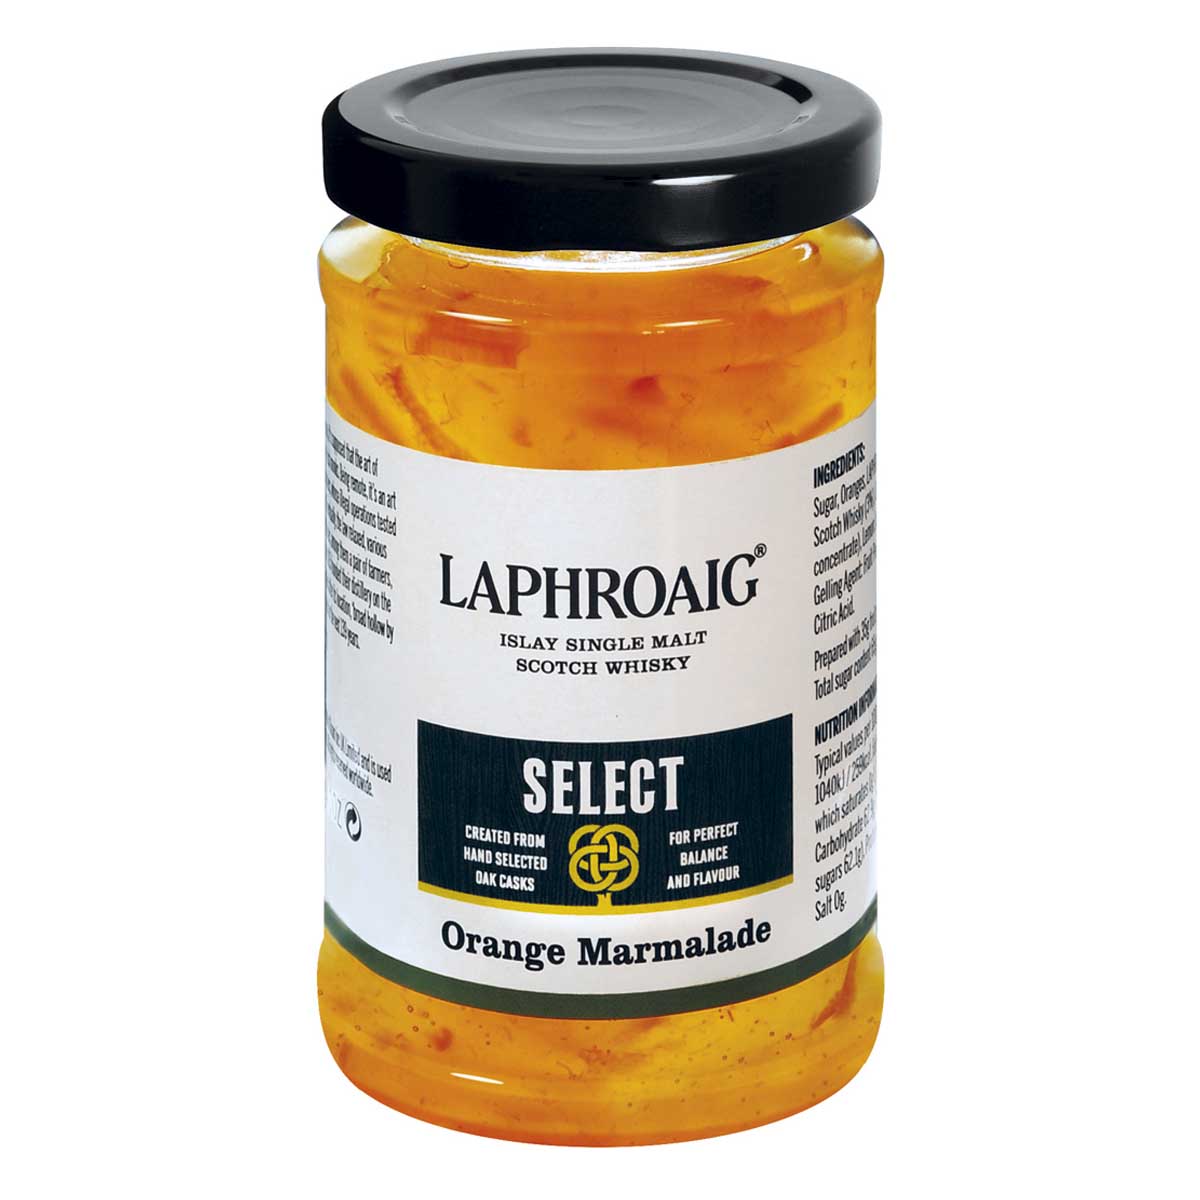 Elsenham – Laphroaig Orange Marmalade 235g